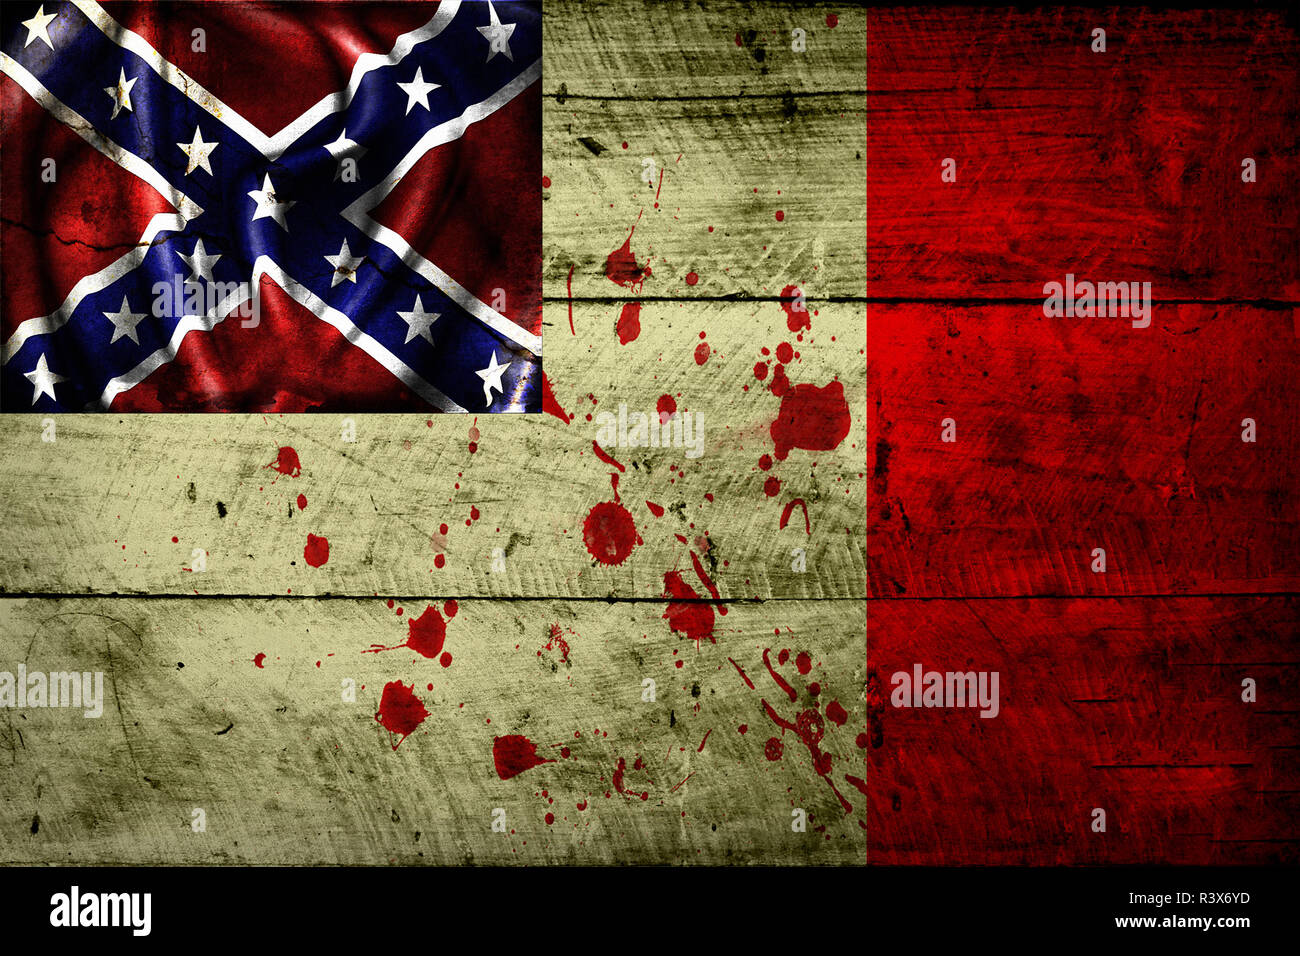 Grunge flag of Confederacy (3) Stock Photo